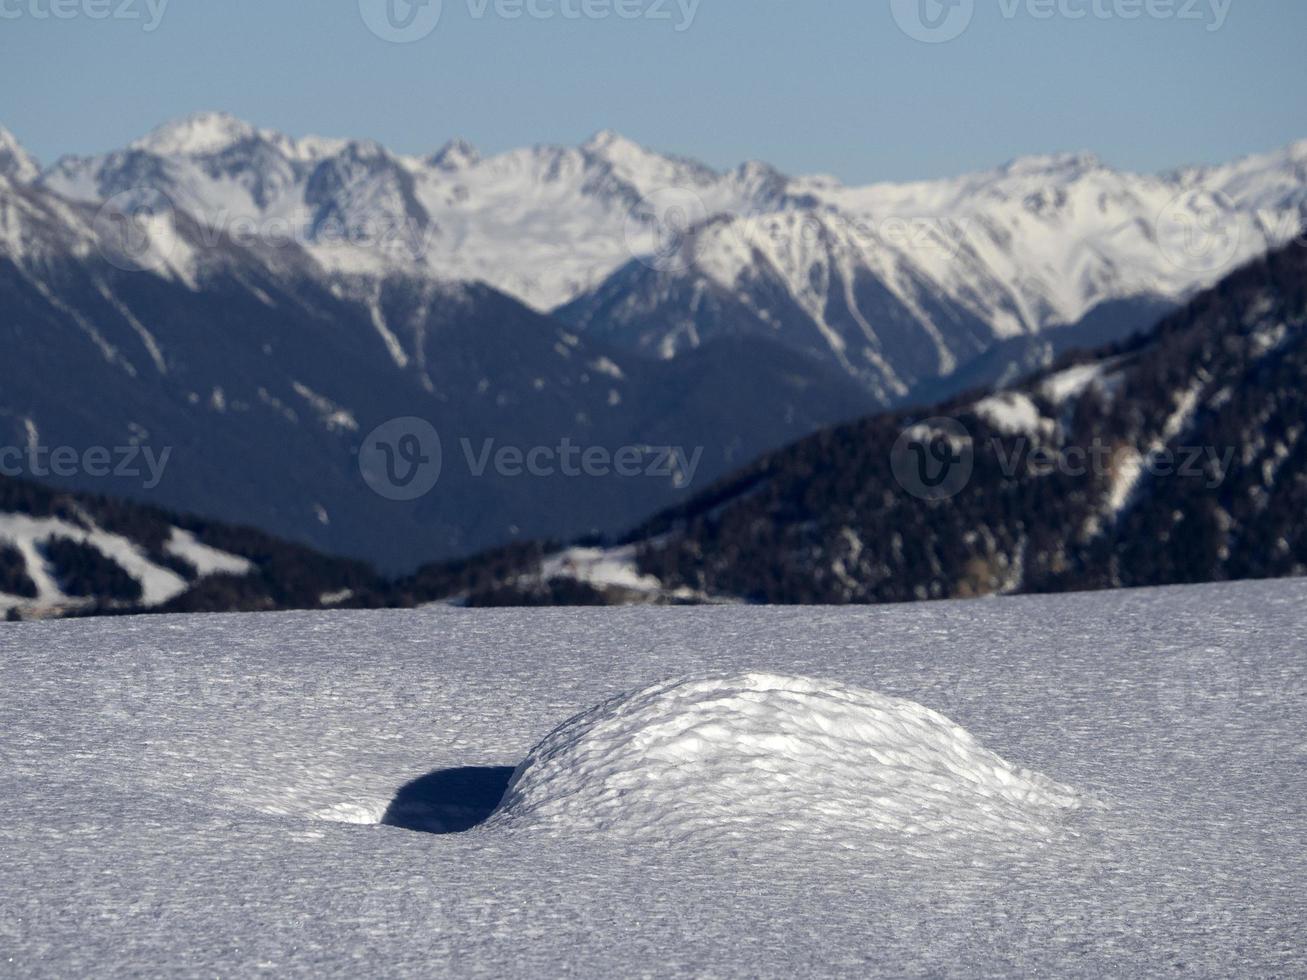 dolomitas detalle de nieve congelada en la montaña foto